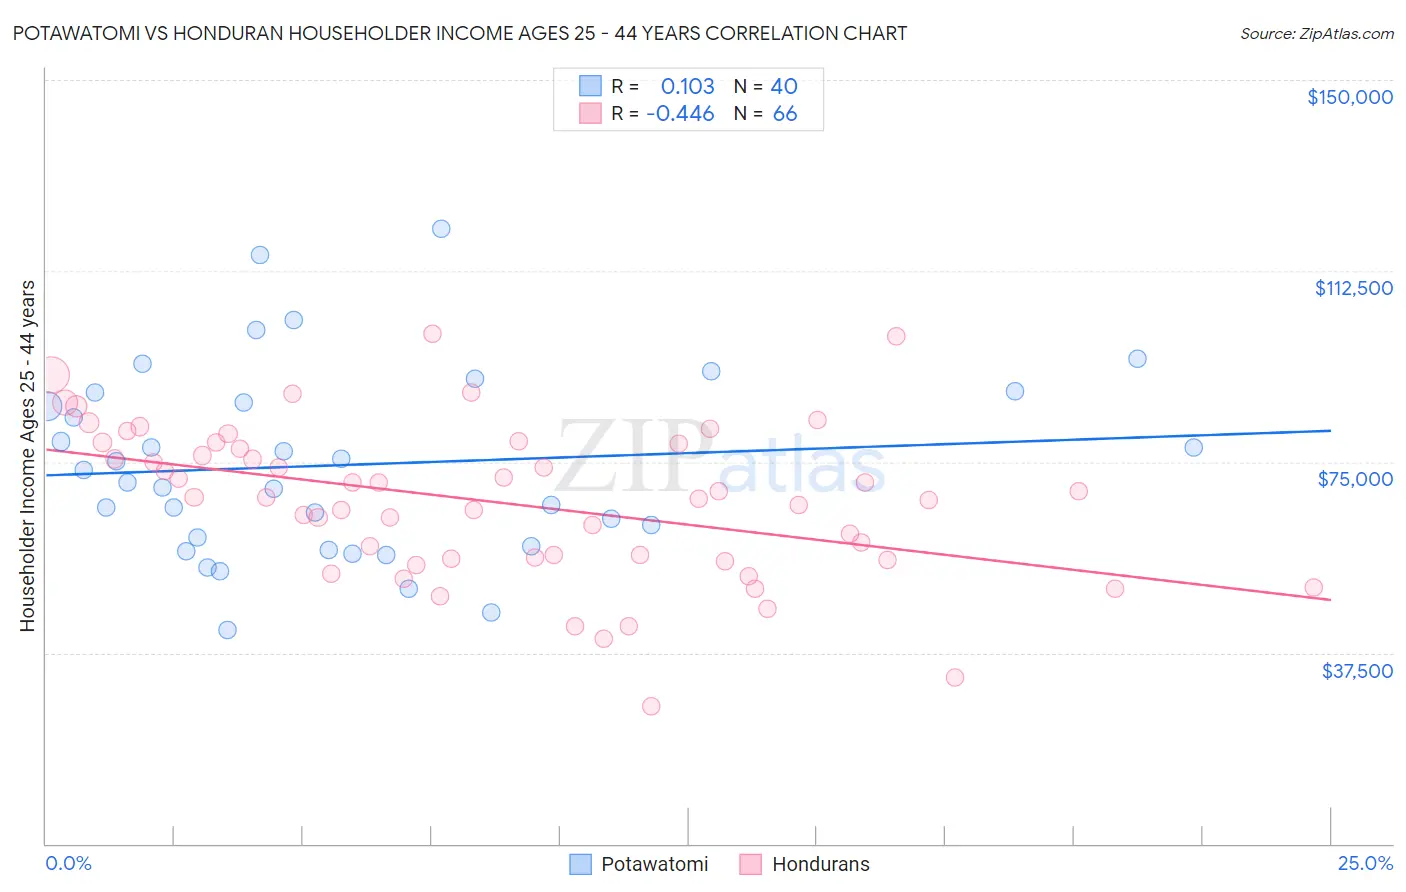 Potawatomi vs Honduran Householder Income Ages 25 - 44 years